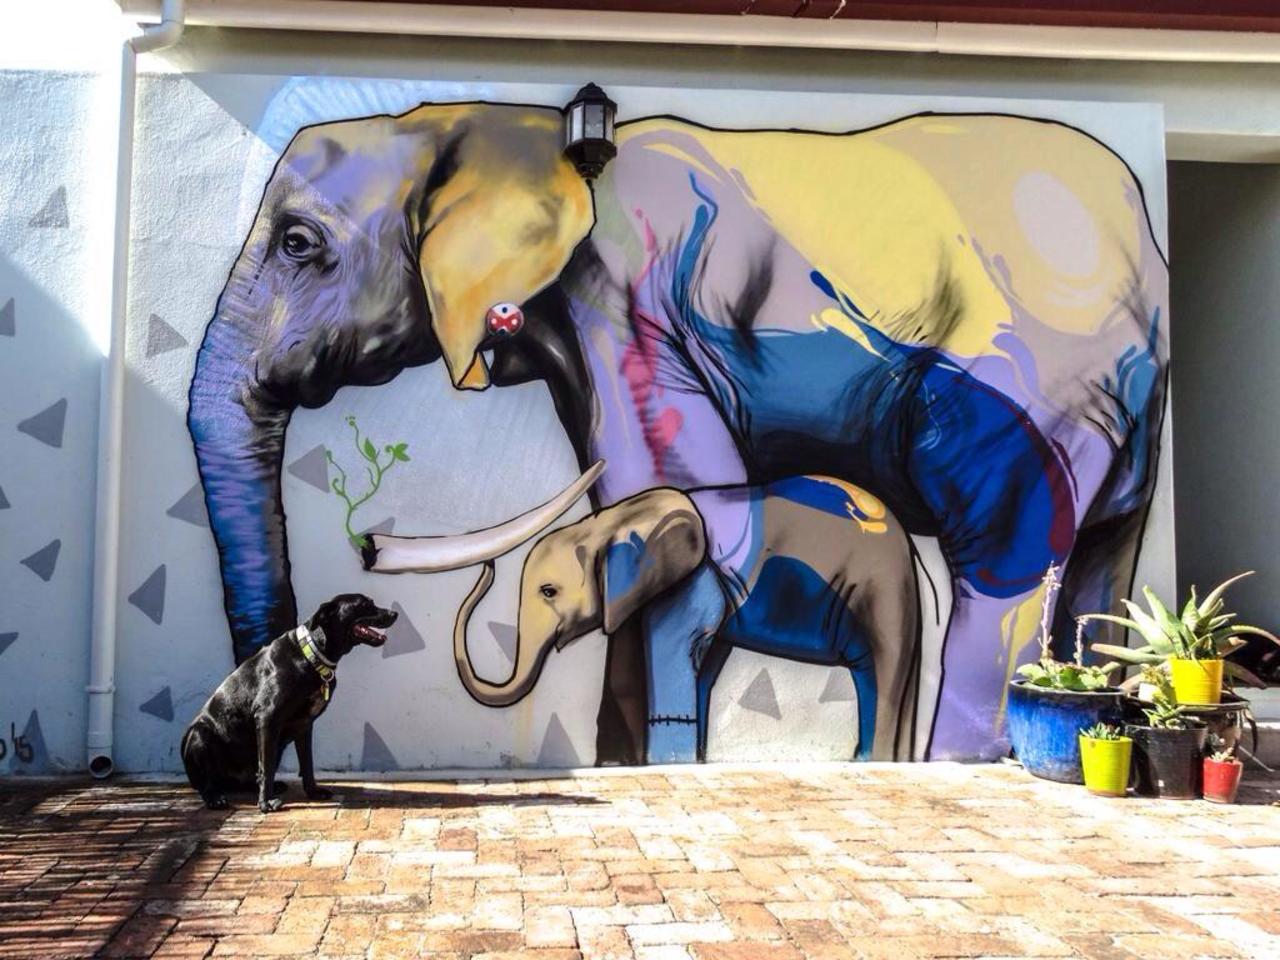 Latest nature in Street Art piece by Falko Paints In Cape Town

#art #mural #graffiti #streetart http://t.co/lwqhLPxNUn